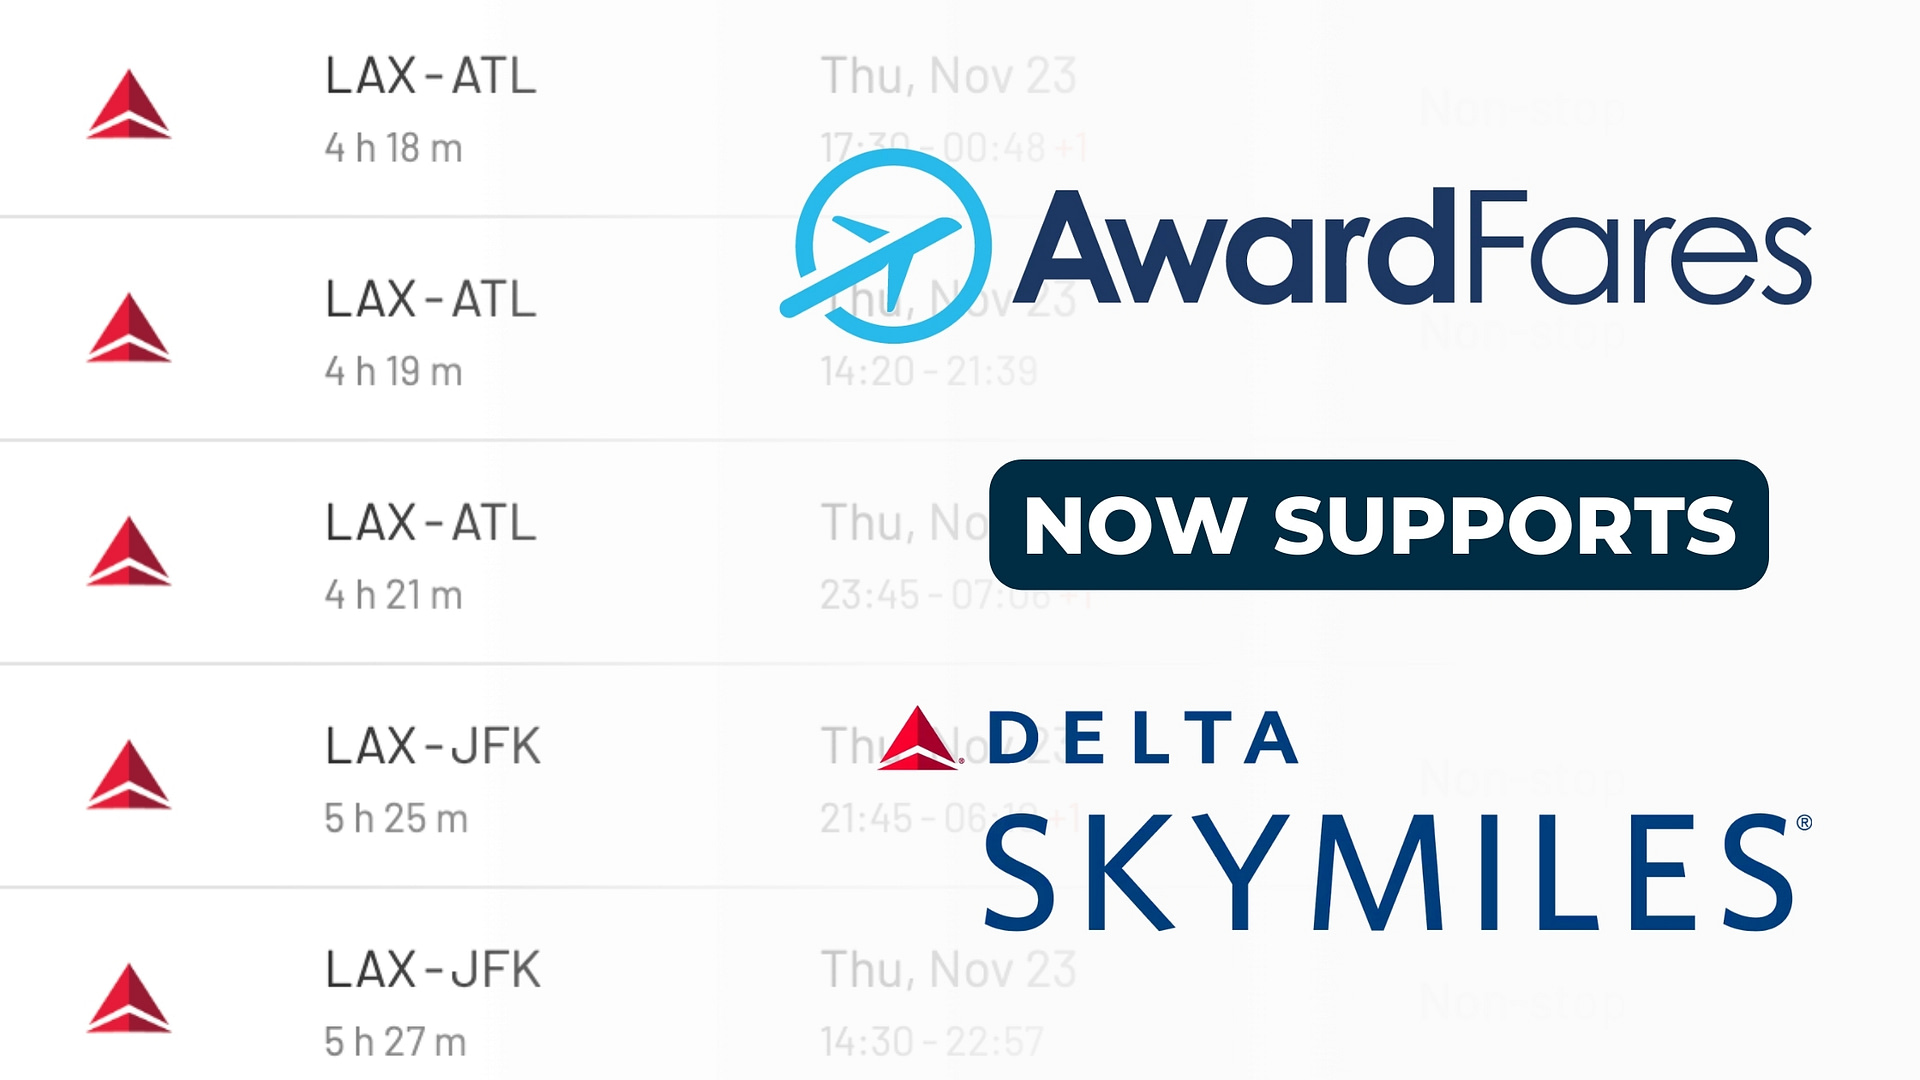 AwardFares supports delta skymiles